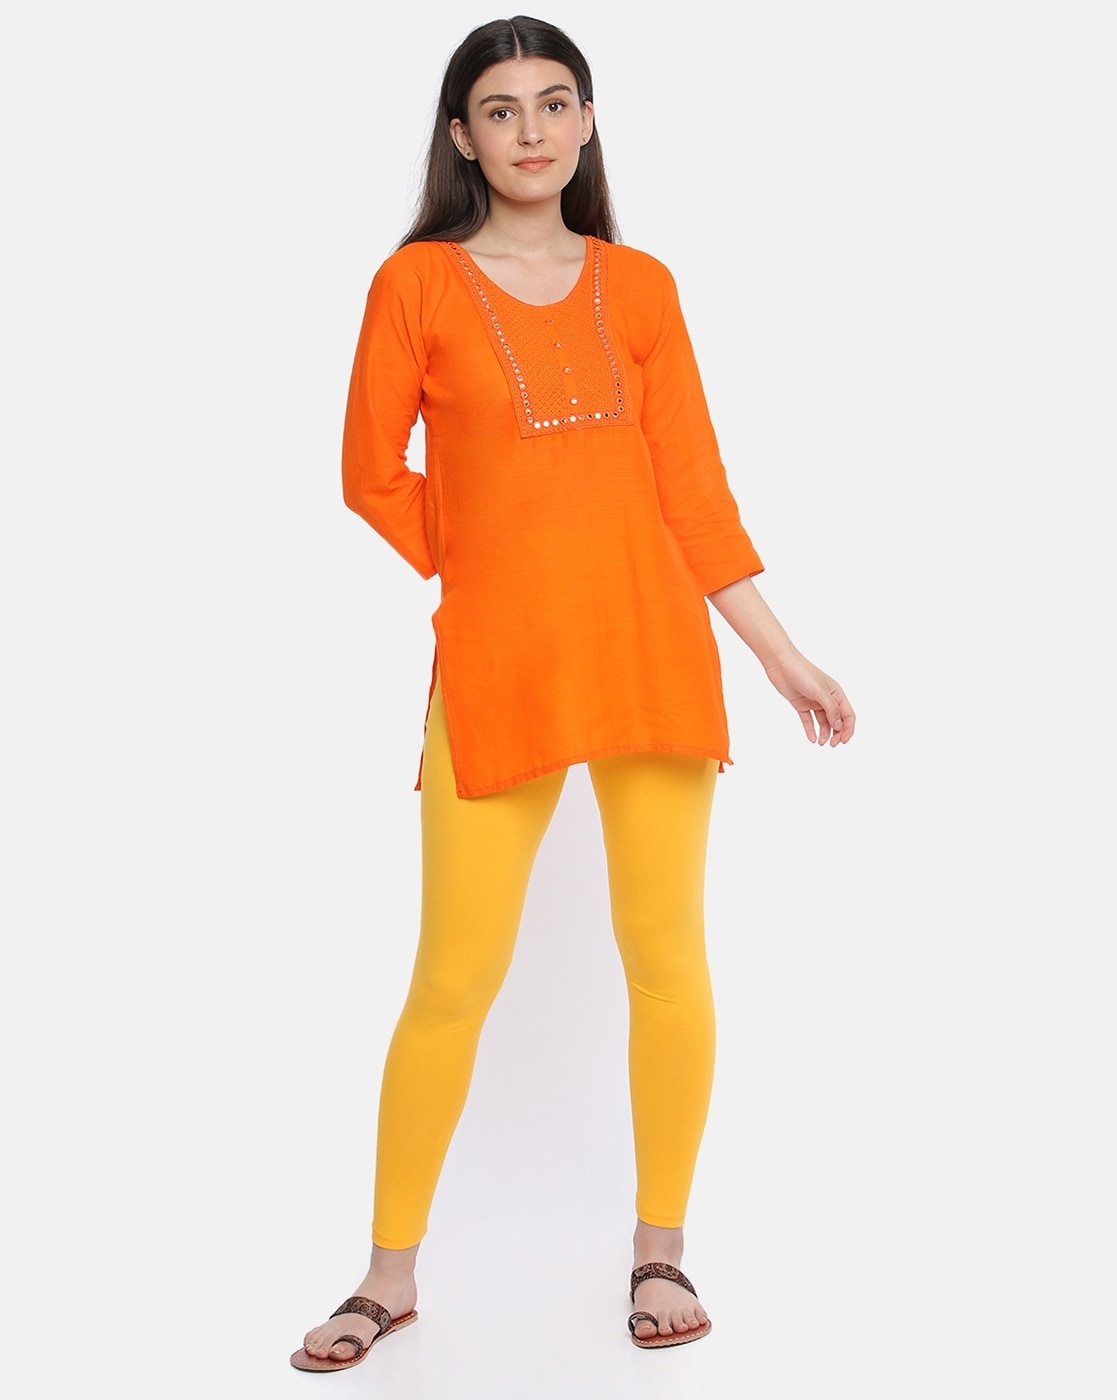 Buy Orange Leggings for Women by DOLLAR MISSY Online | Ajio.com